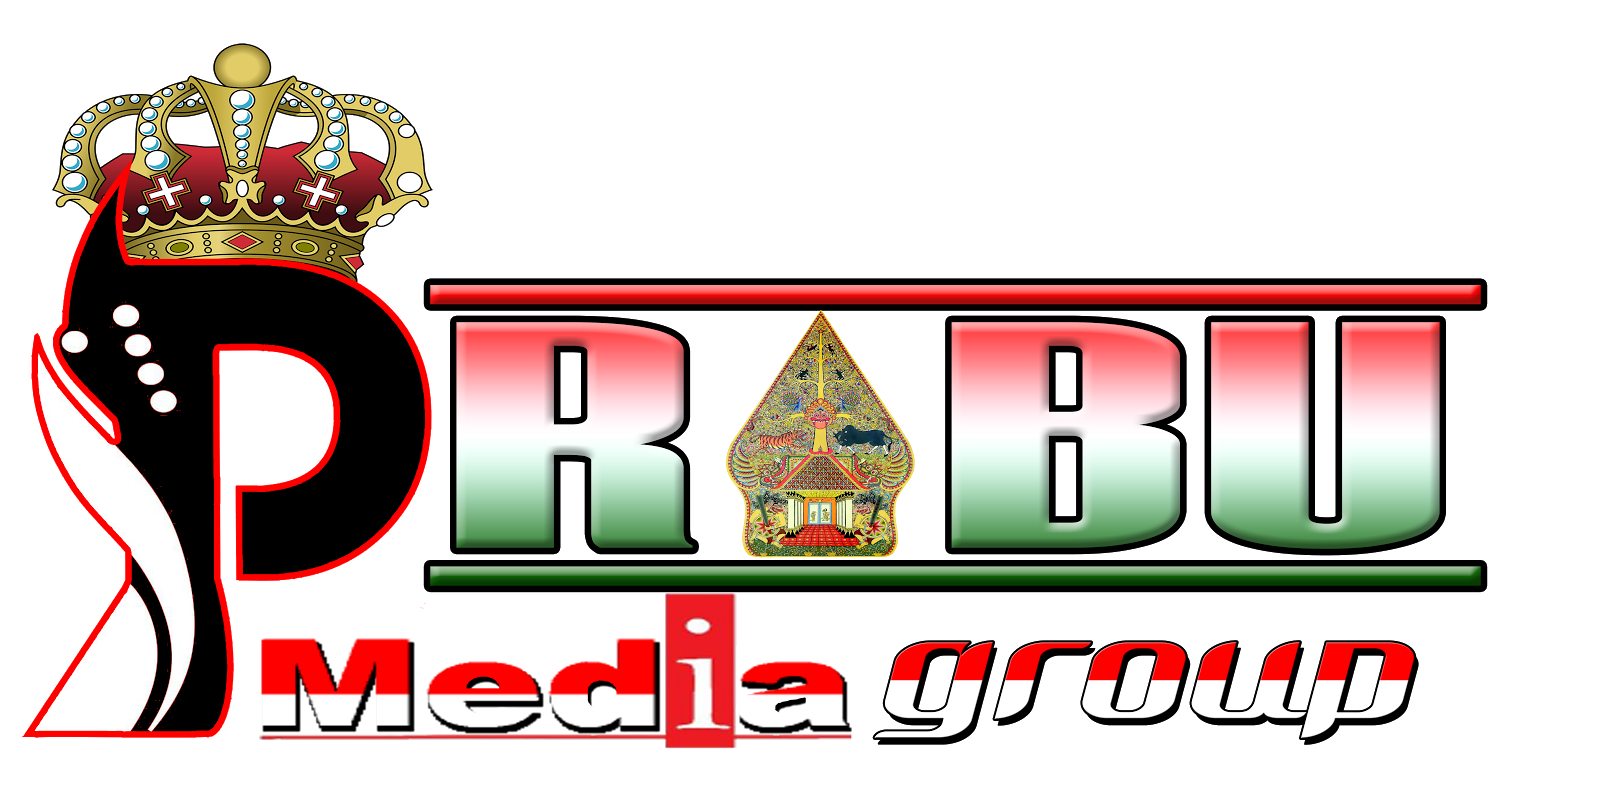 Prabu Media Group